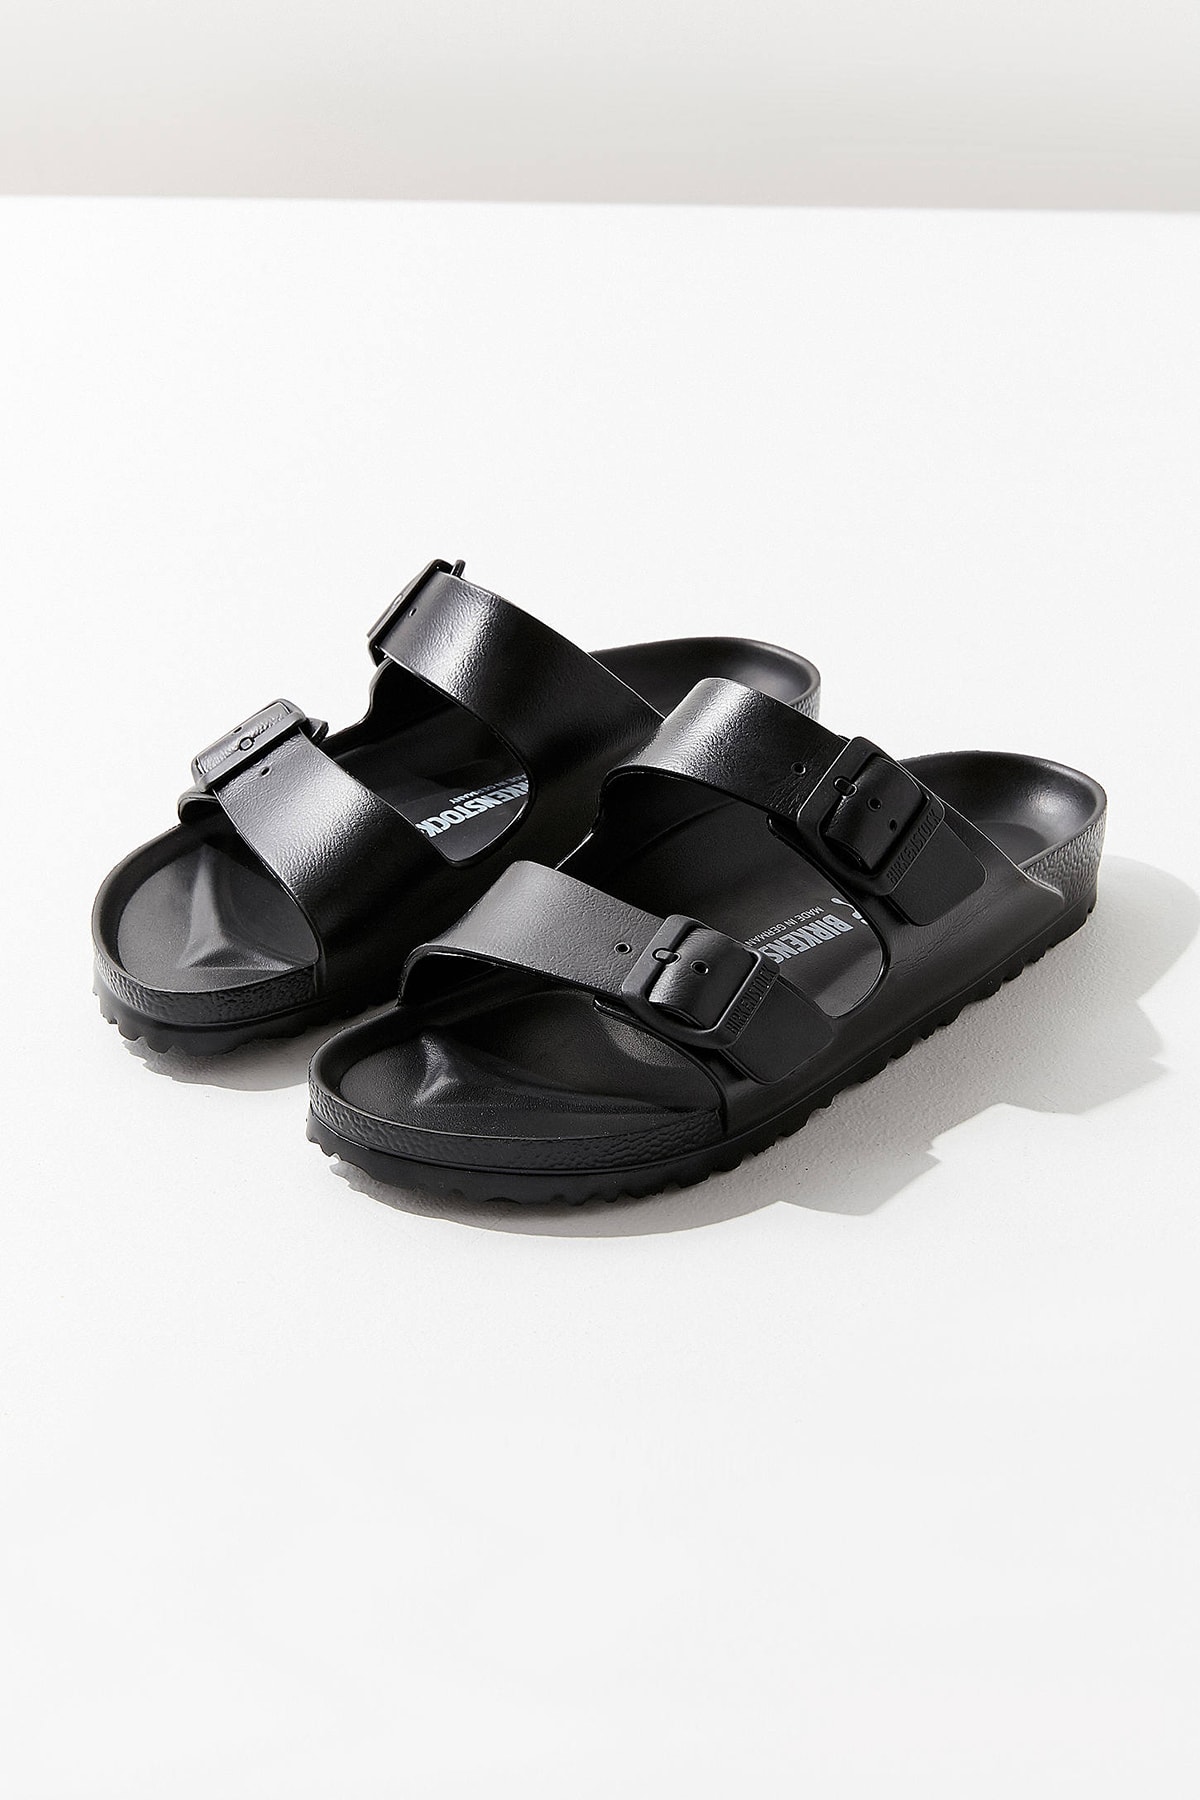 Birkenstock Arizona EVA Sandals Black Urban Outfitters Price Release Slip Ons Slippers Where to Buy